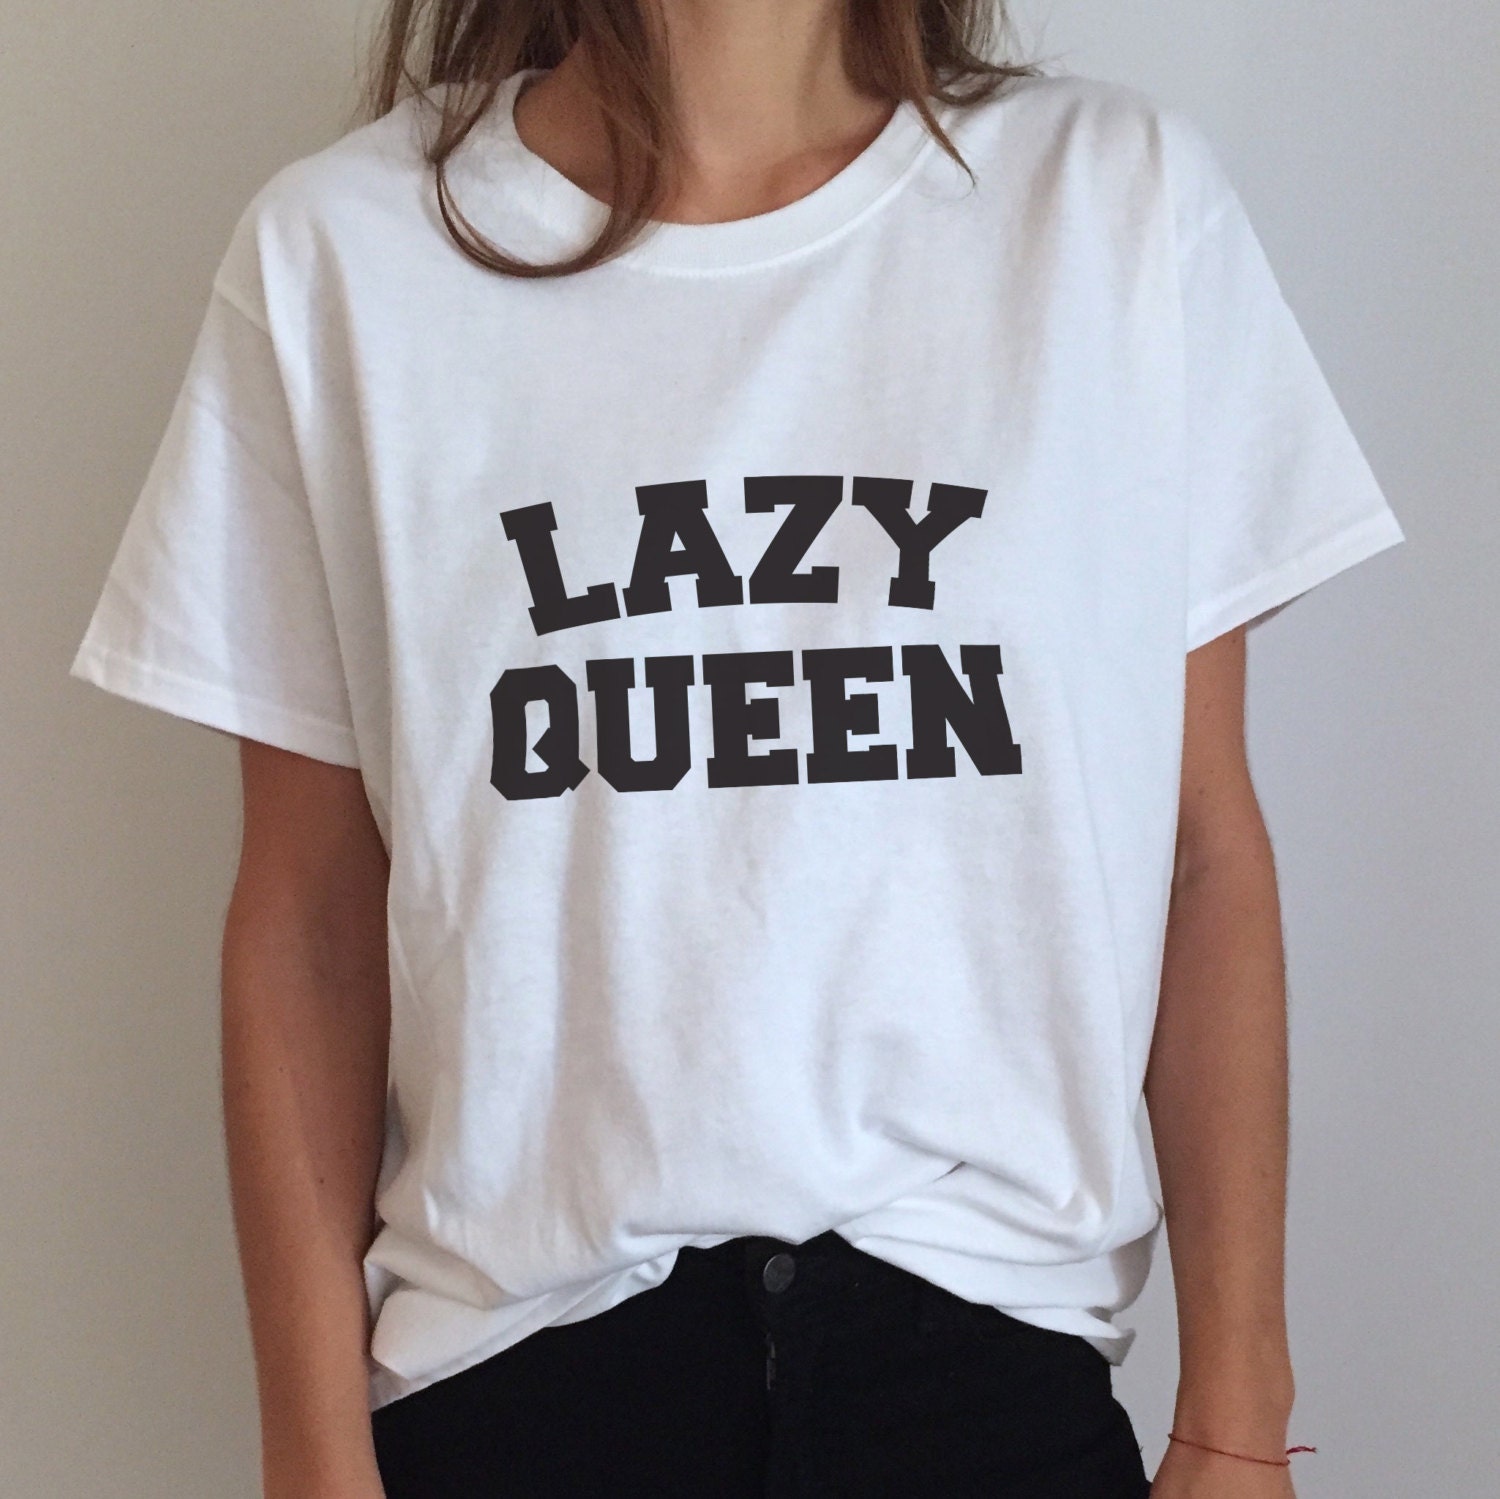 Lazy queen Tshirt Fashion funny saying dope swag by Nallashop